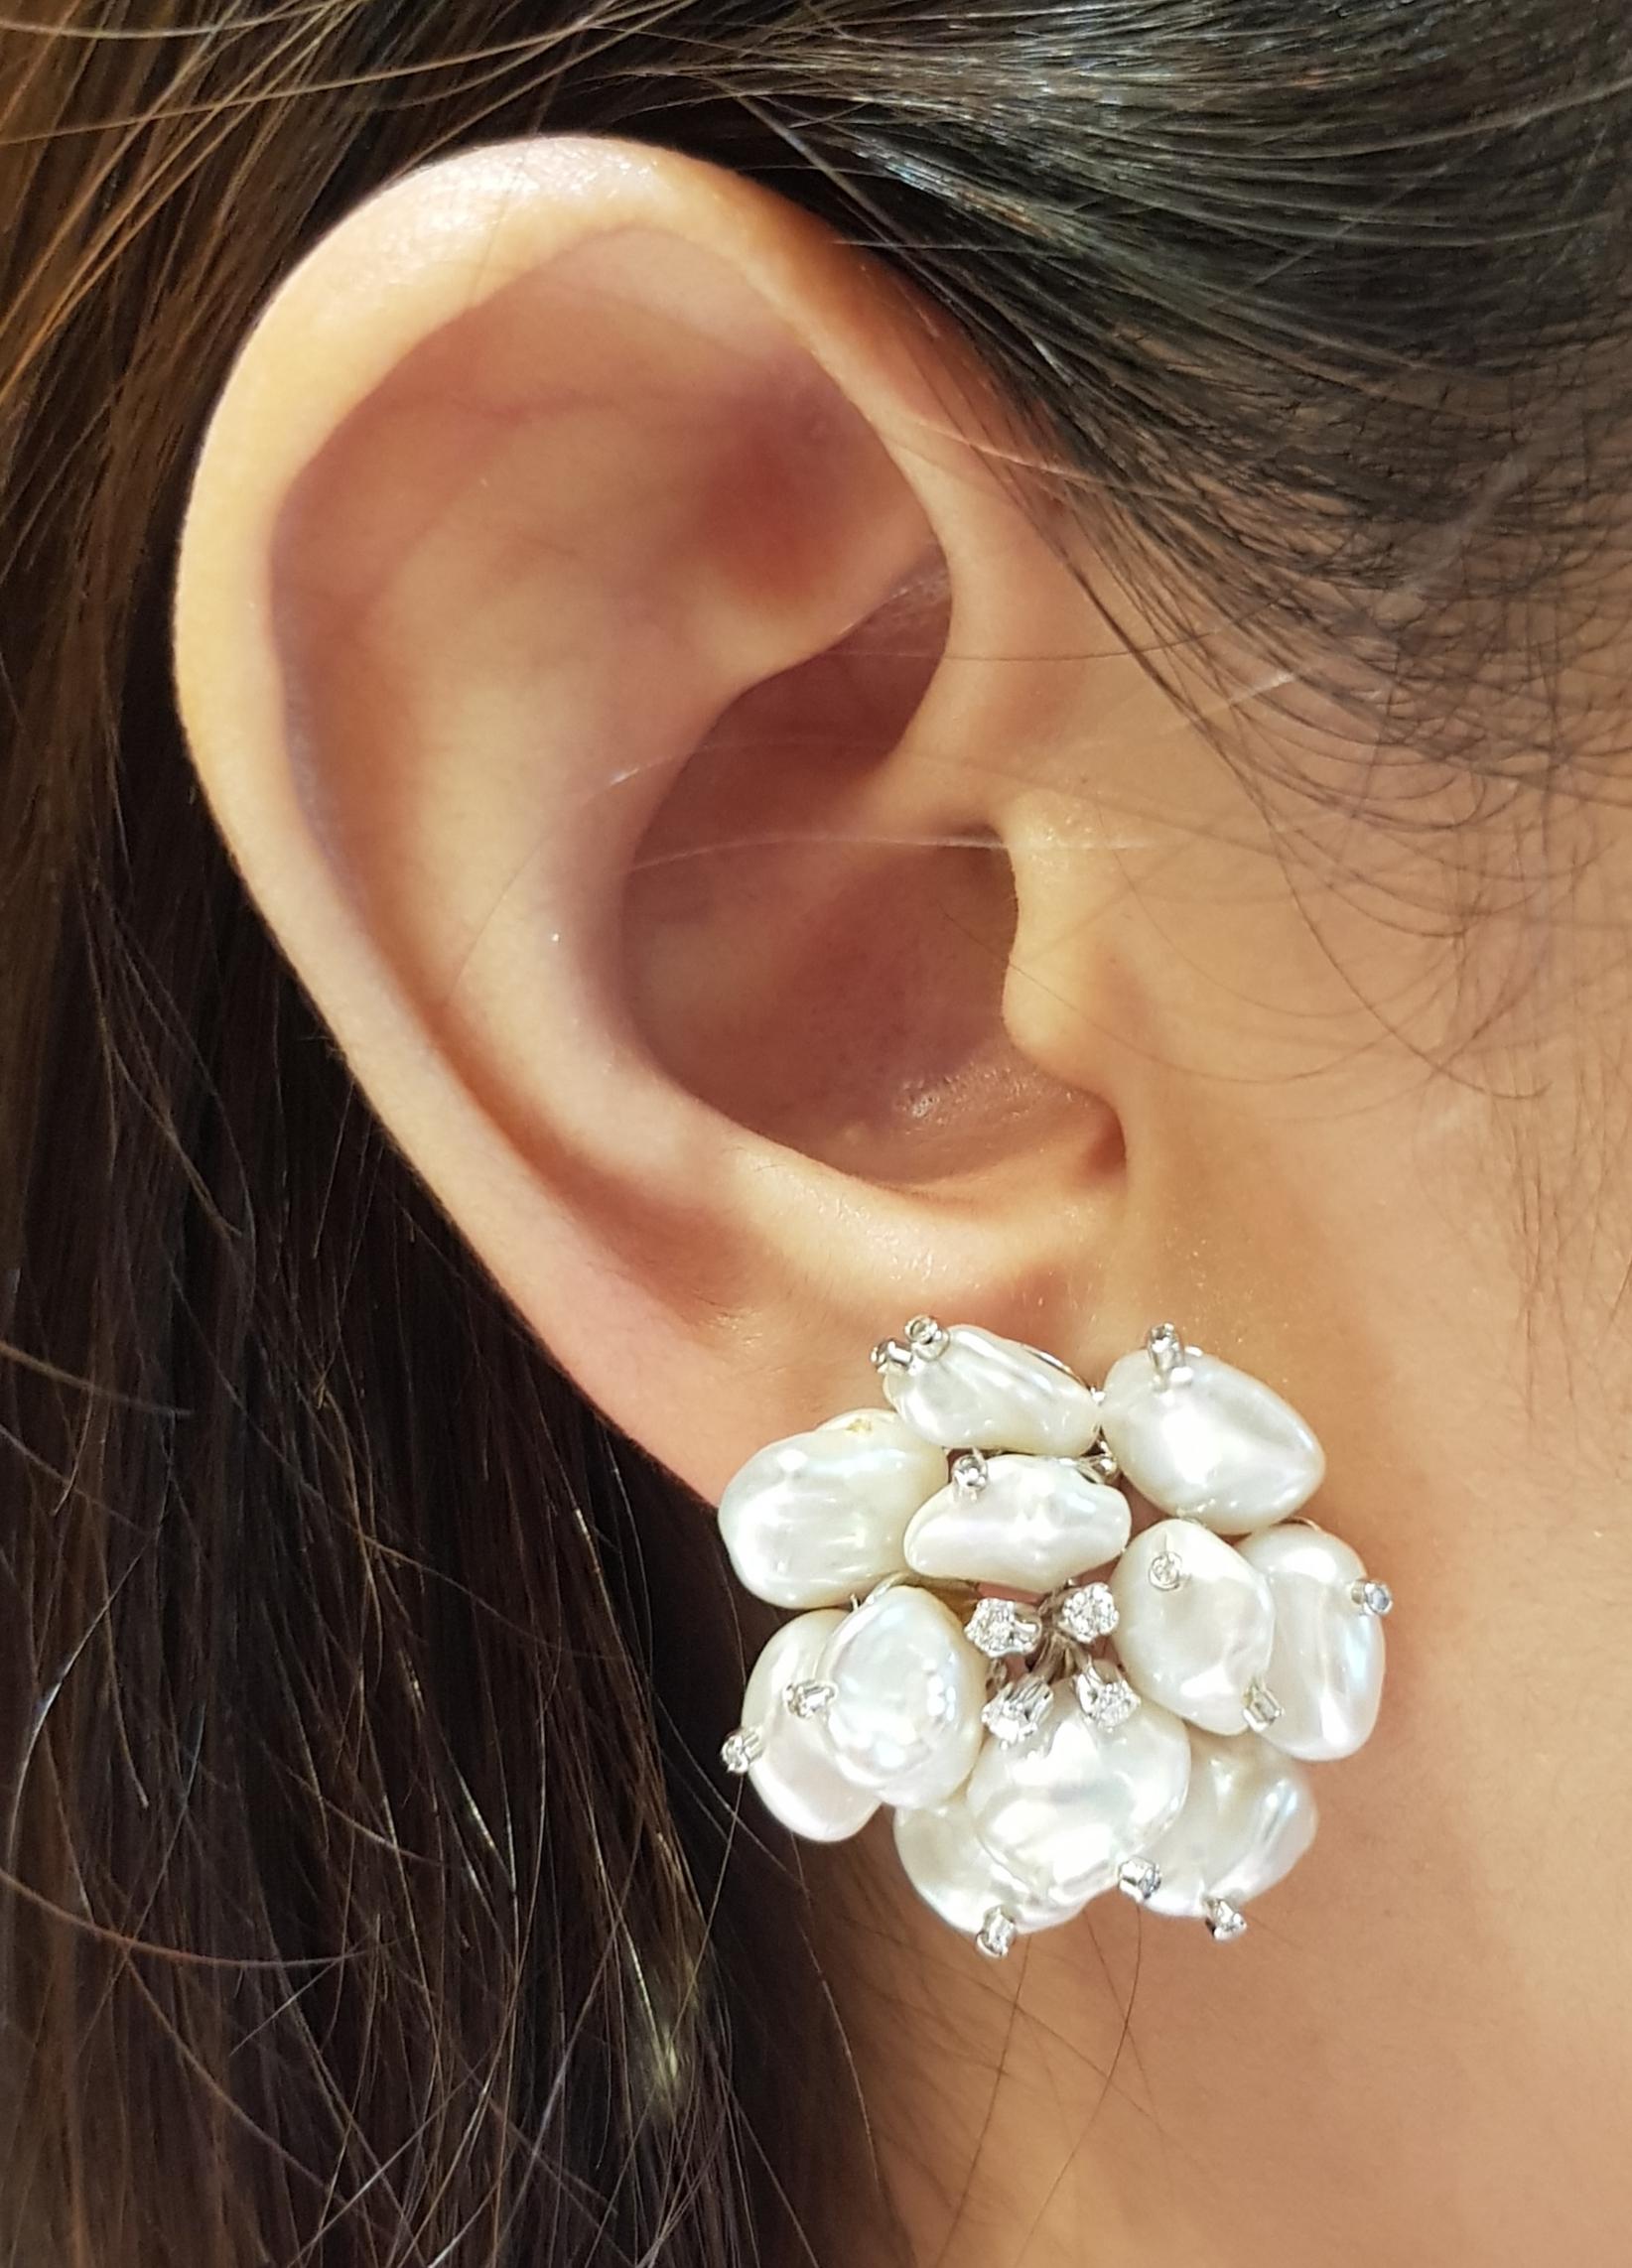 Pearl with Diamond 0.29 carat Earrings set in 18 Karat White Gold Settings

Width:  2.6 cm 
Length:  2.6 cm
Total Weight: 18.69 grams

